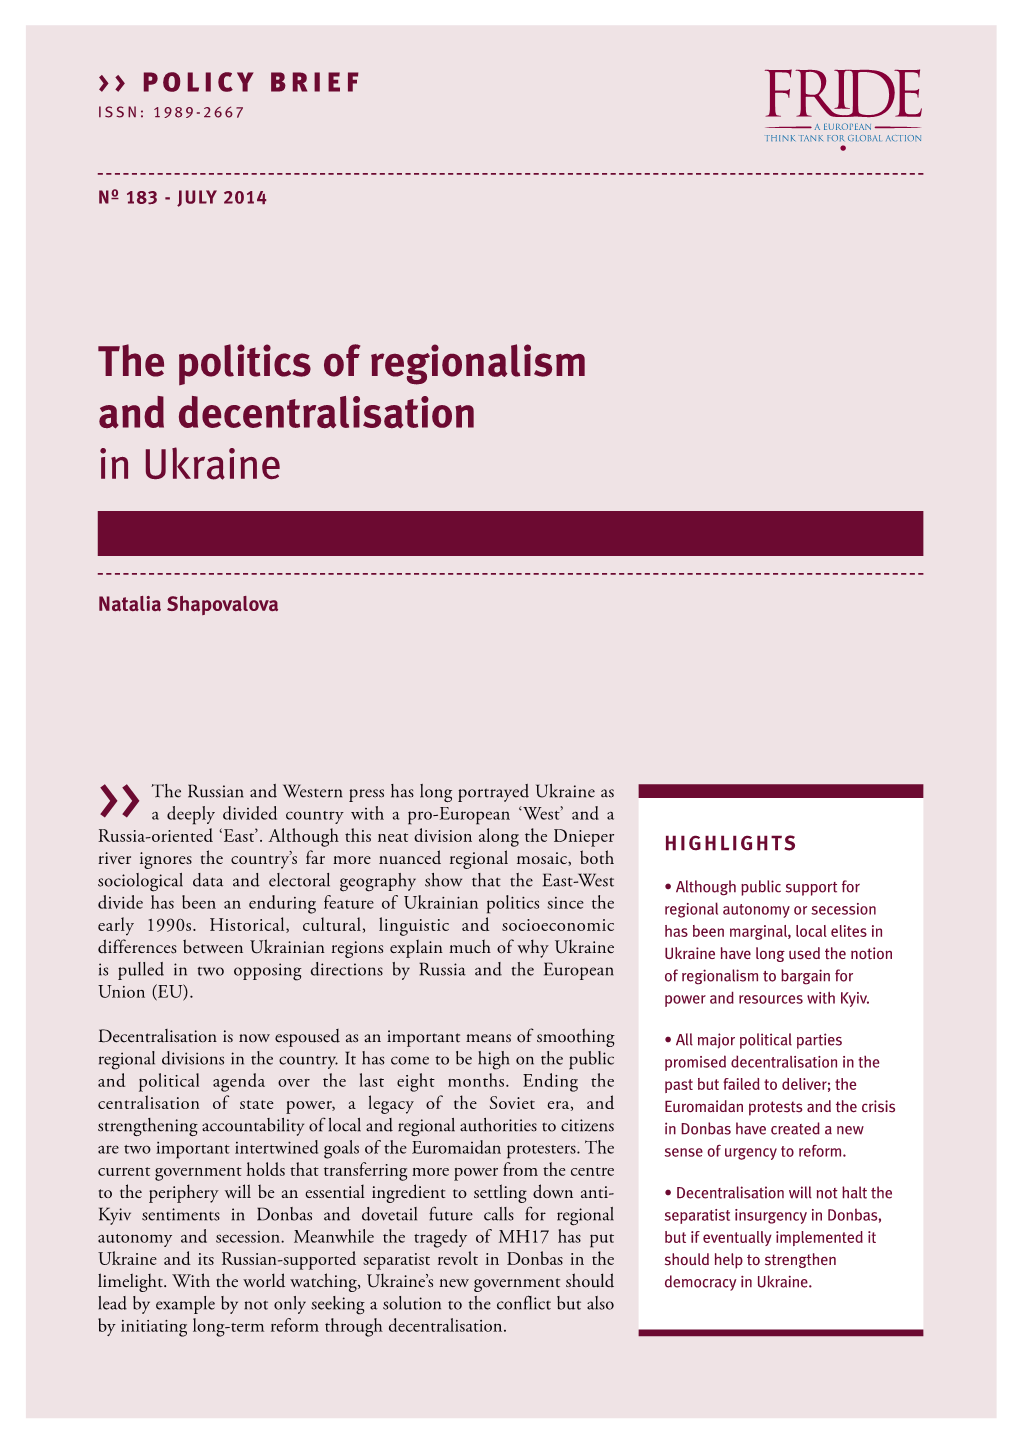 The Politics of Regionalism and Decentralisation in Ukraine